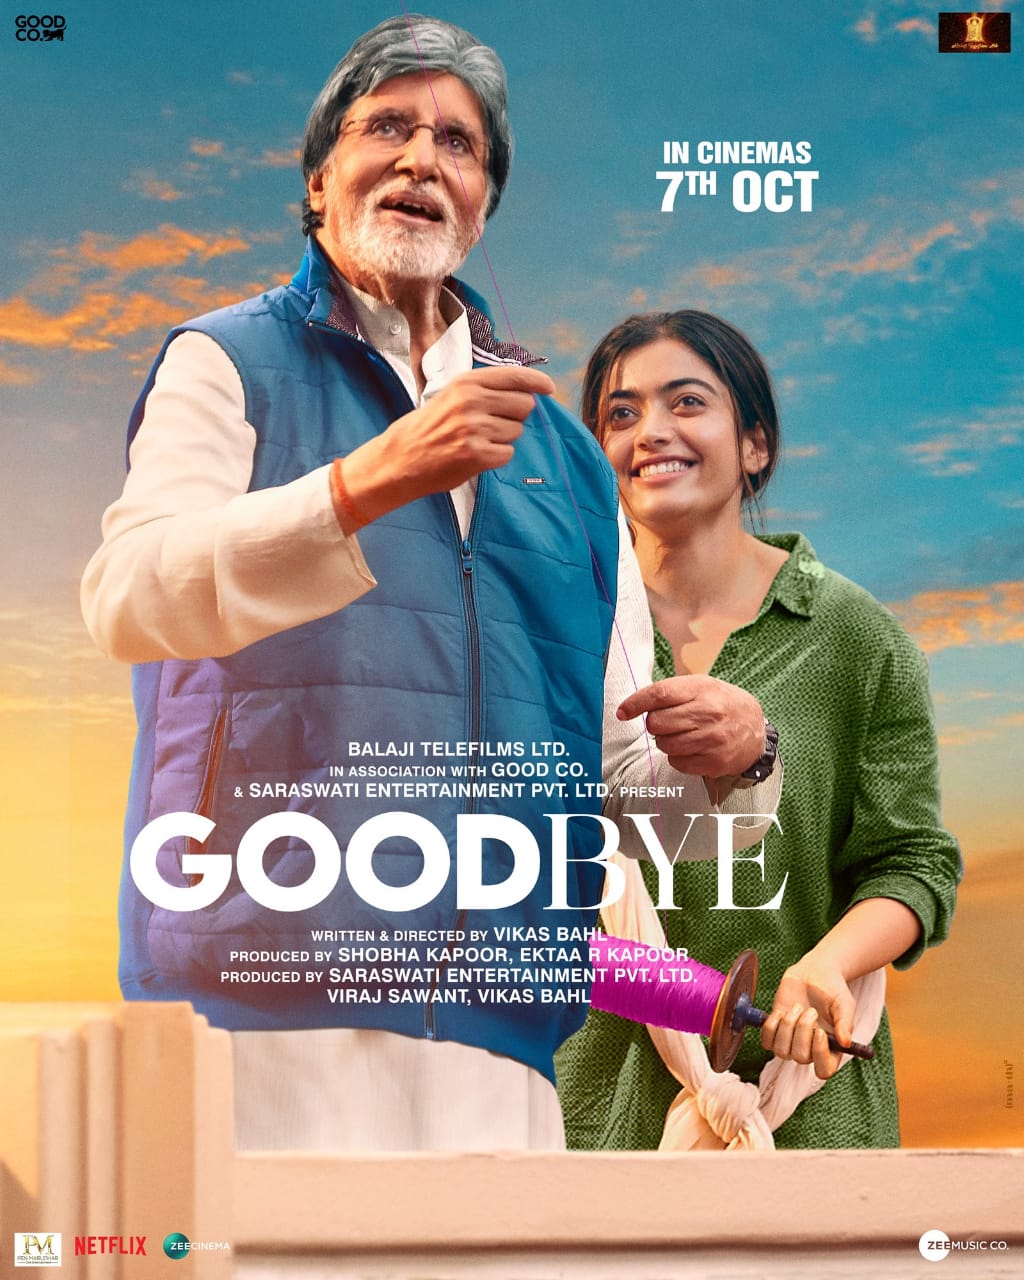 Rashmika Mandanna Amitabh Bachchan Good Bye Movie Release Date